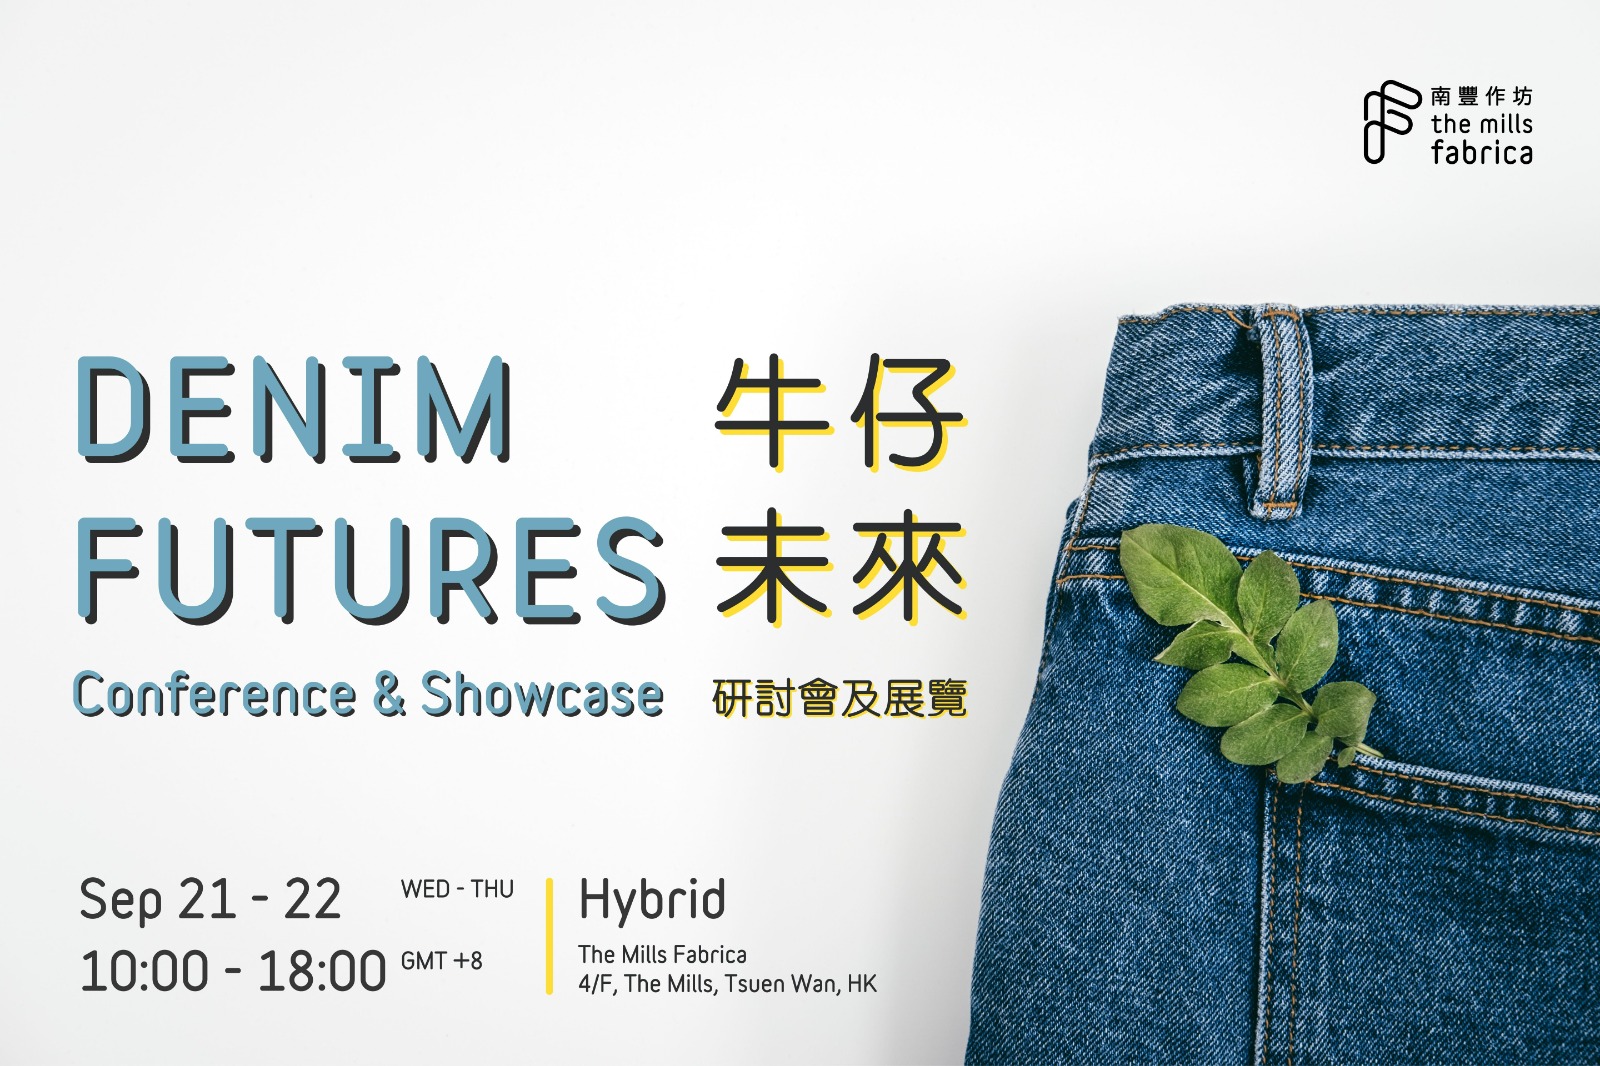 Denim Futures Conference & Showcase - The Mills Fabrica